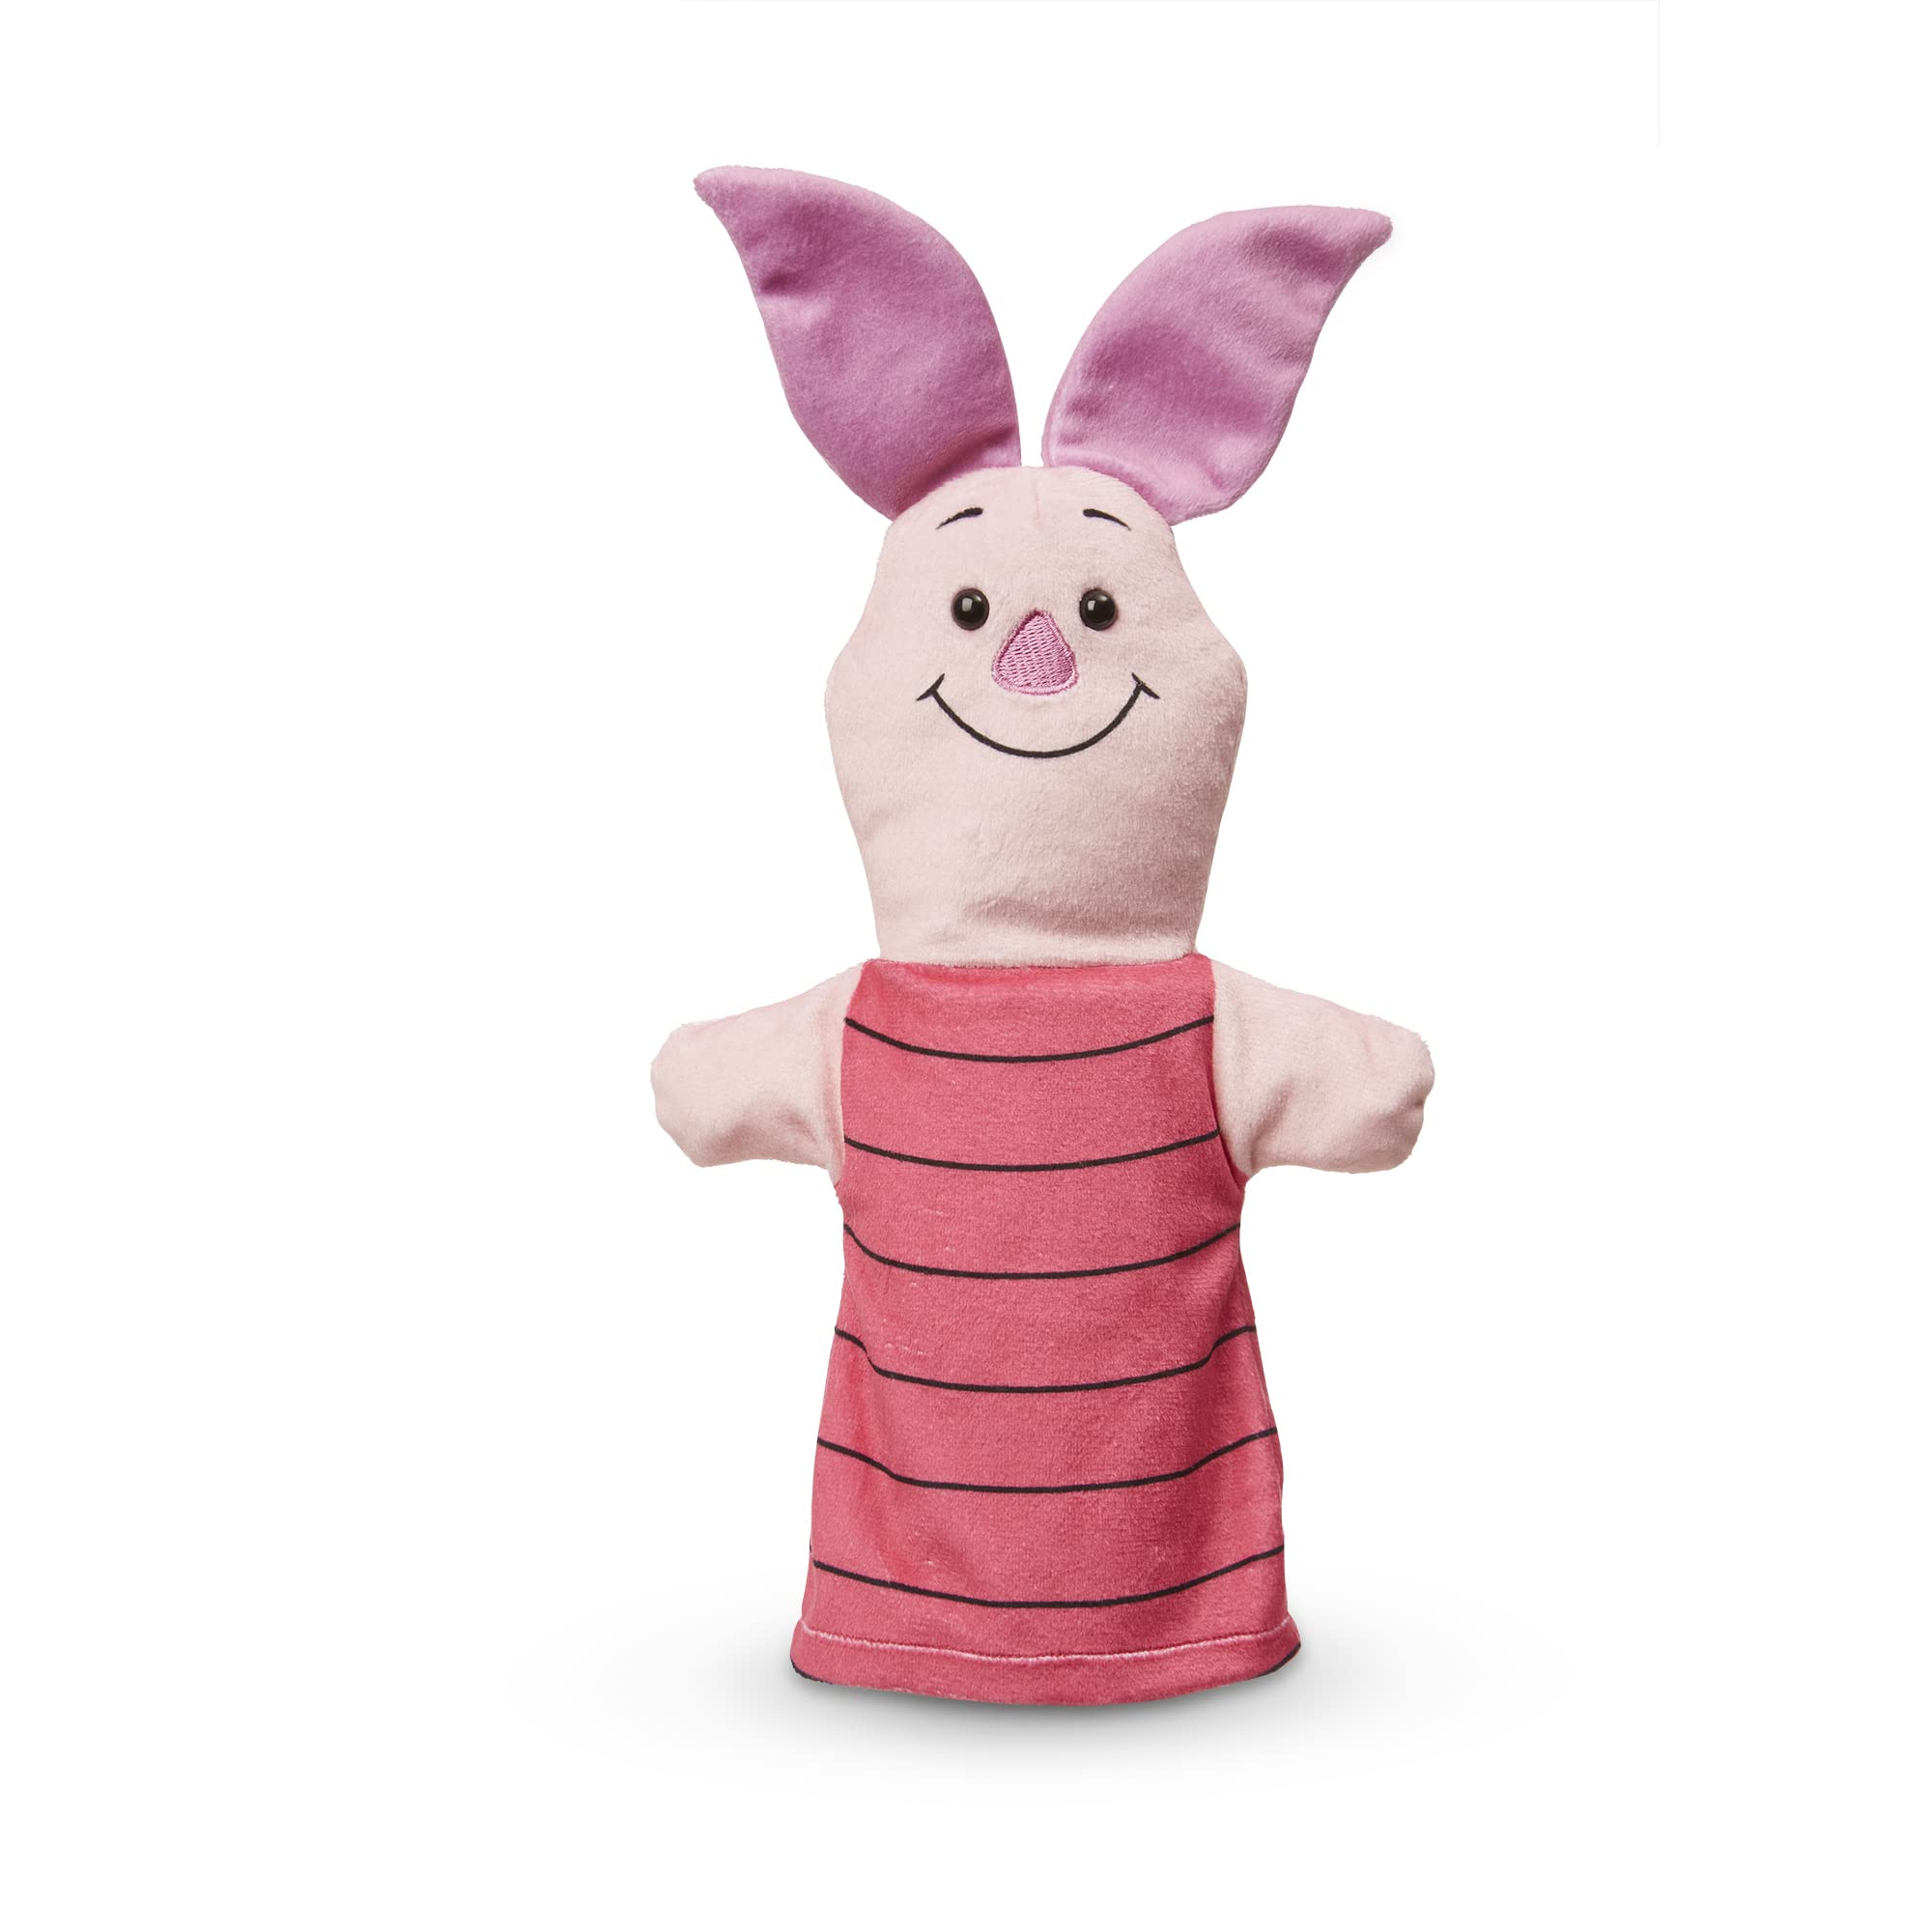 Melissa & Doug Disney Winnie the Pooh Soft & Cuddly Hand Puppets - Winnie The Pooh Toys, Soft Hand Puppets For Kids Ages 2+